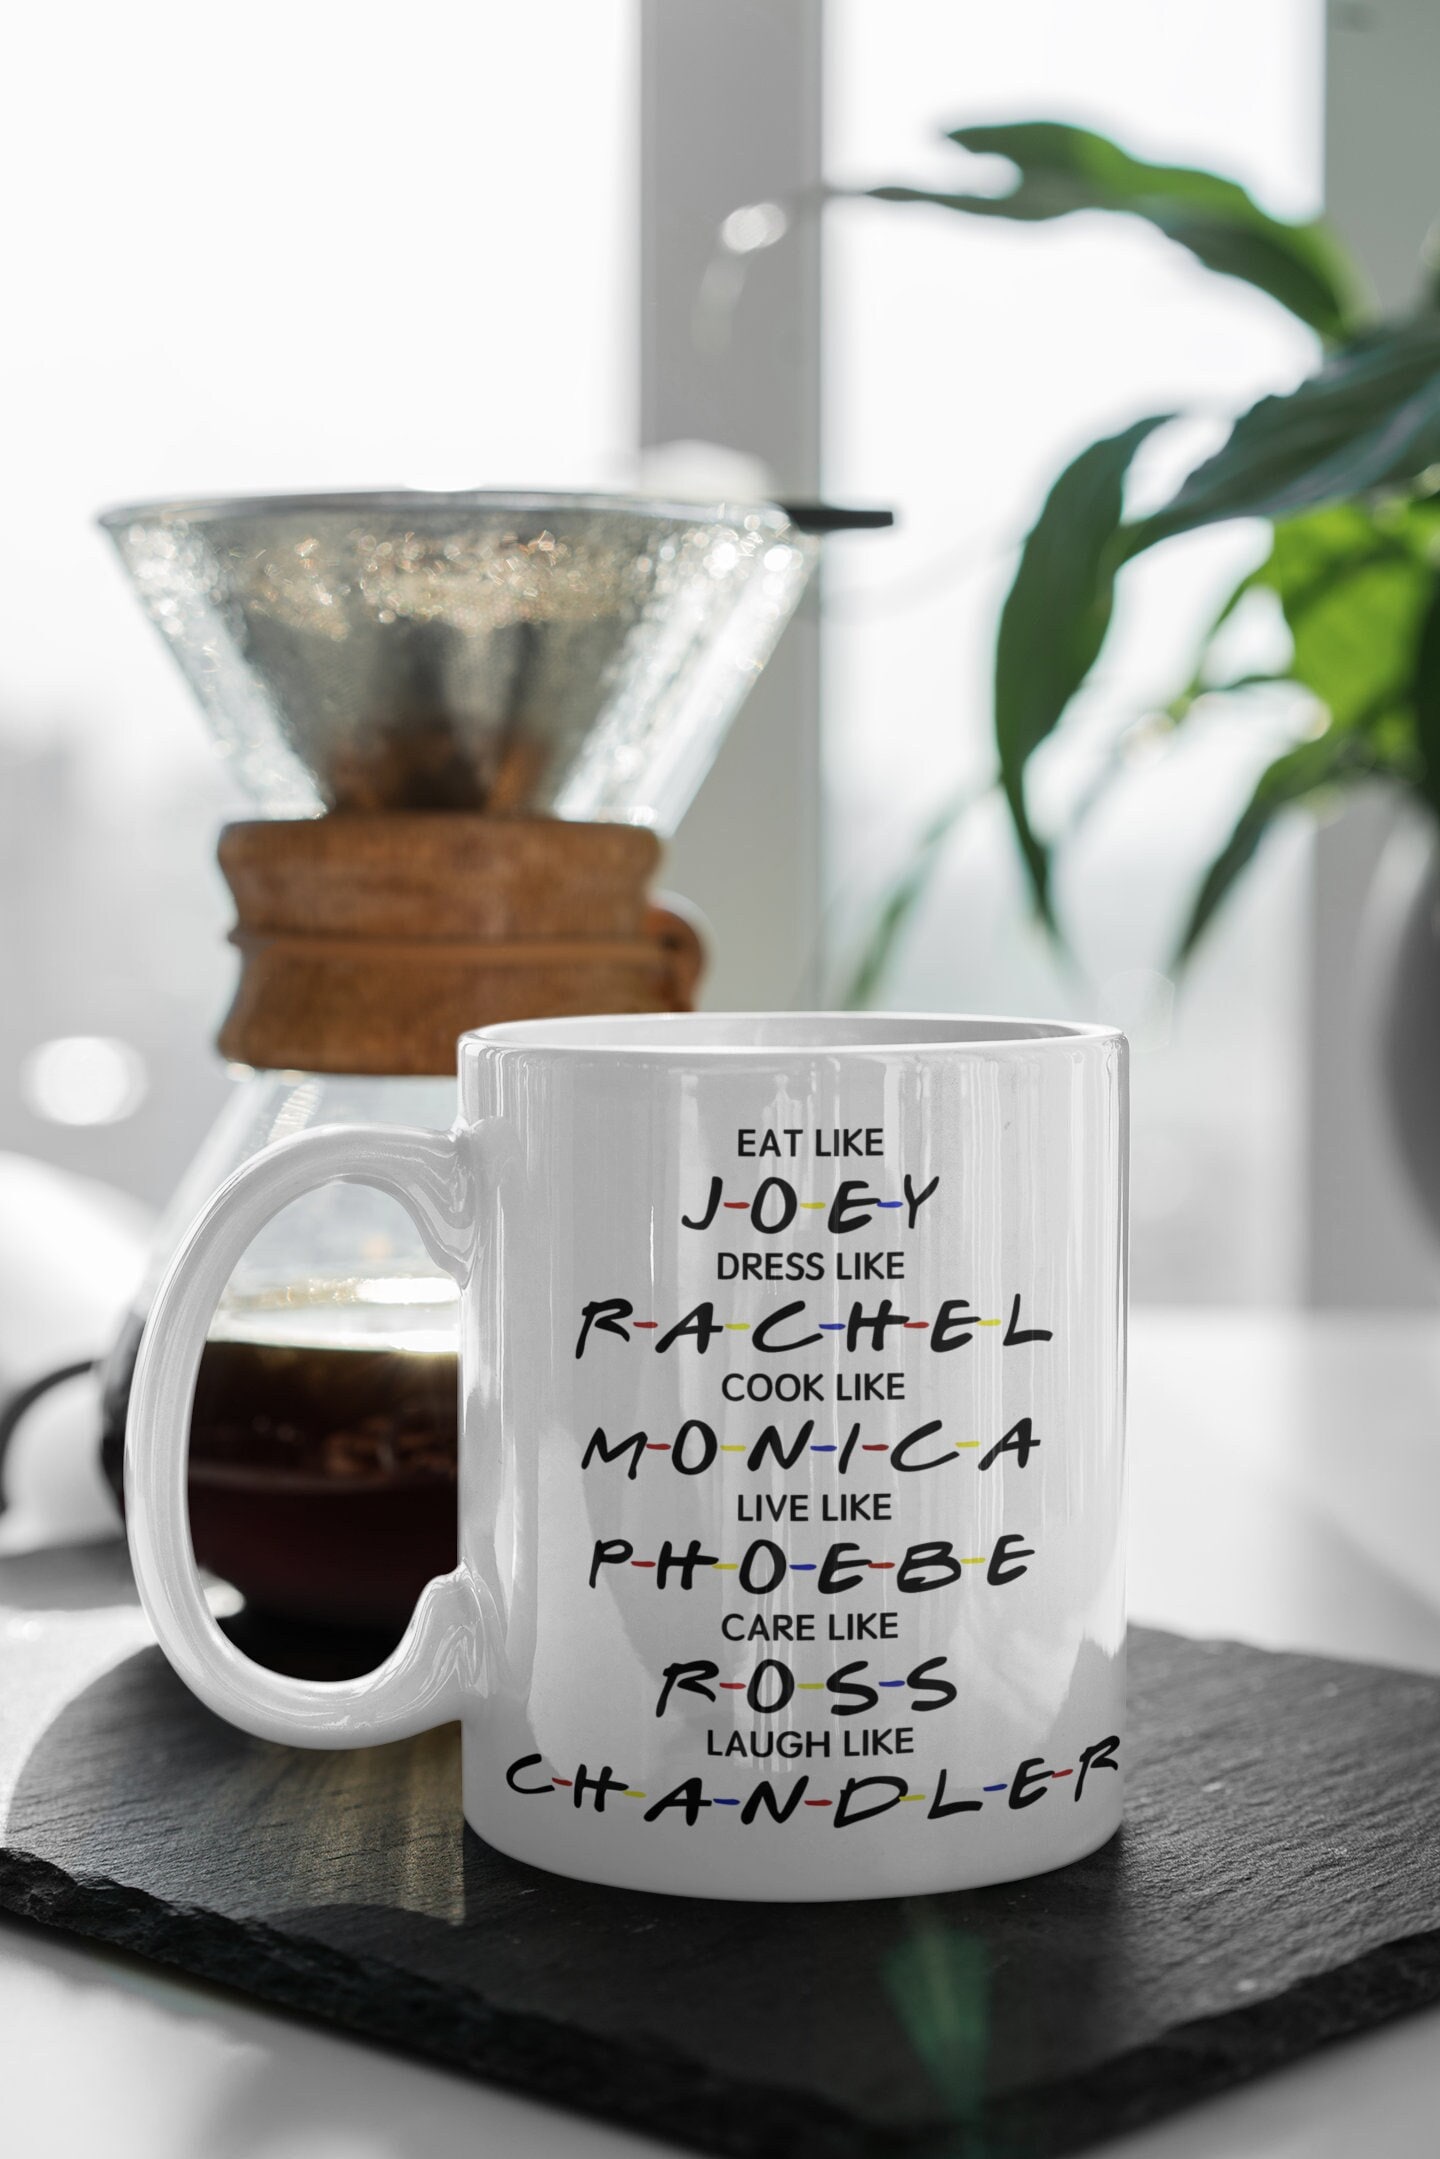 Mug Friends LIPTON RACHEL jaune tasse thé série TV céramique - SOS